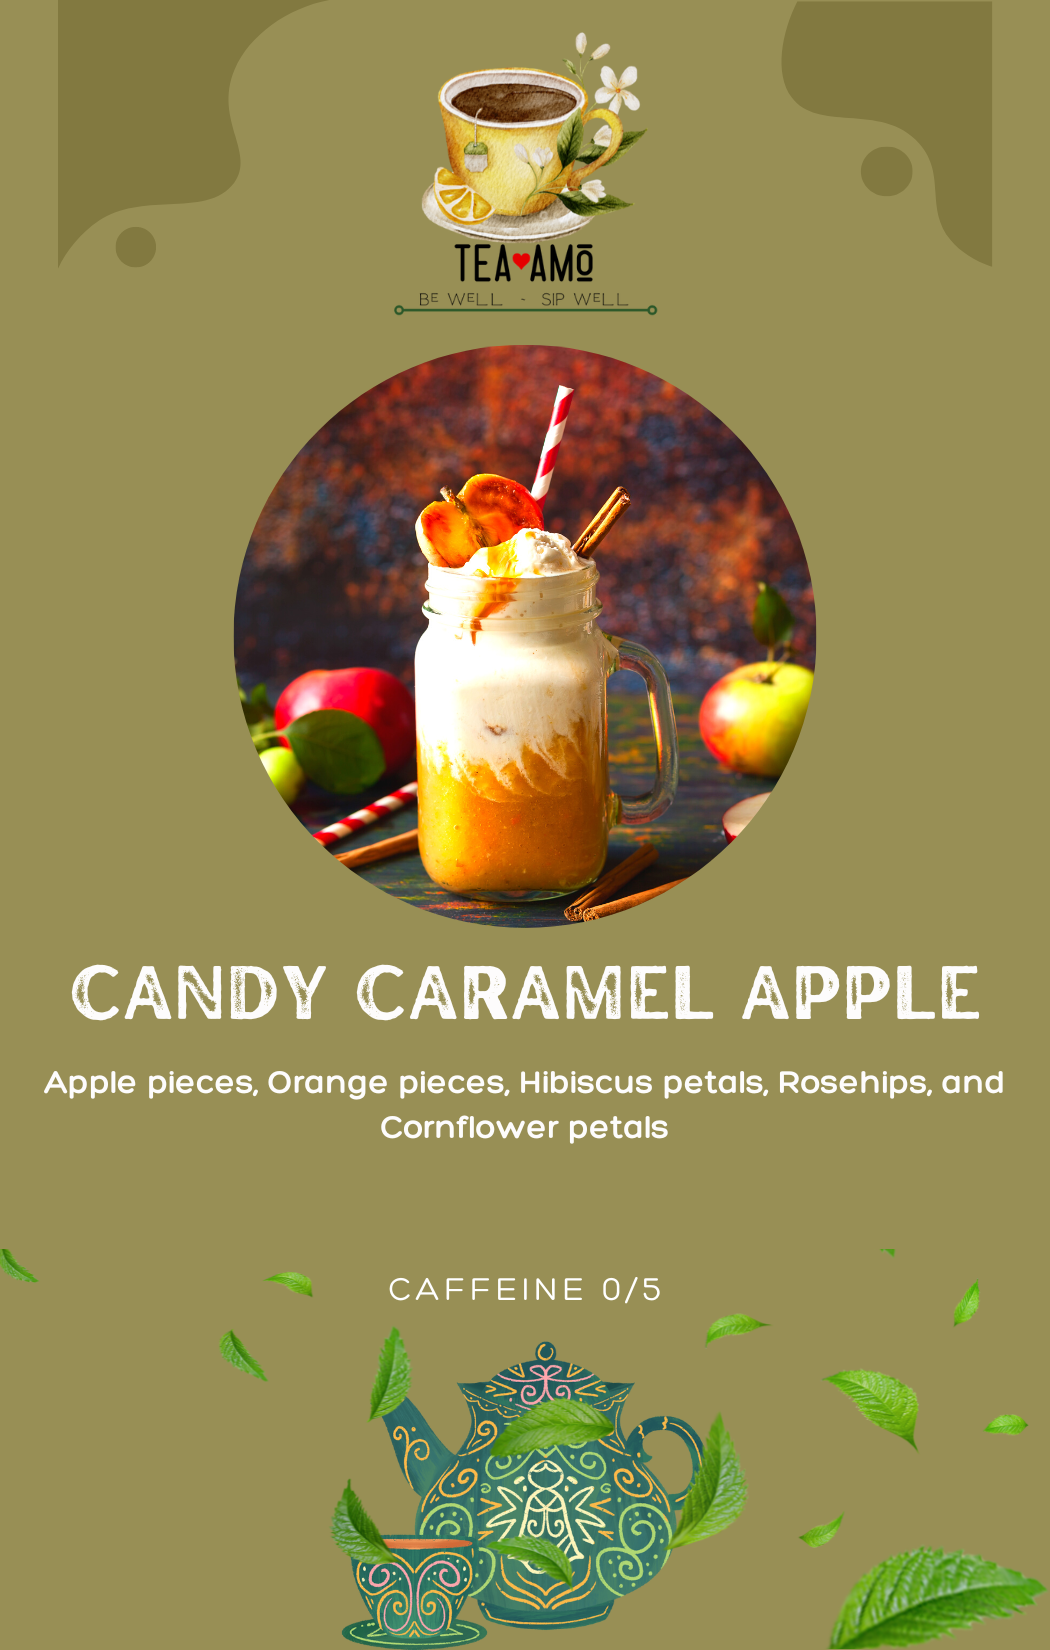 Tea Amo Wellness: Candy Caramel Apple